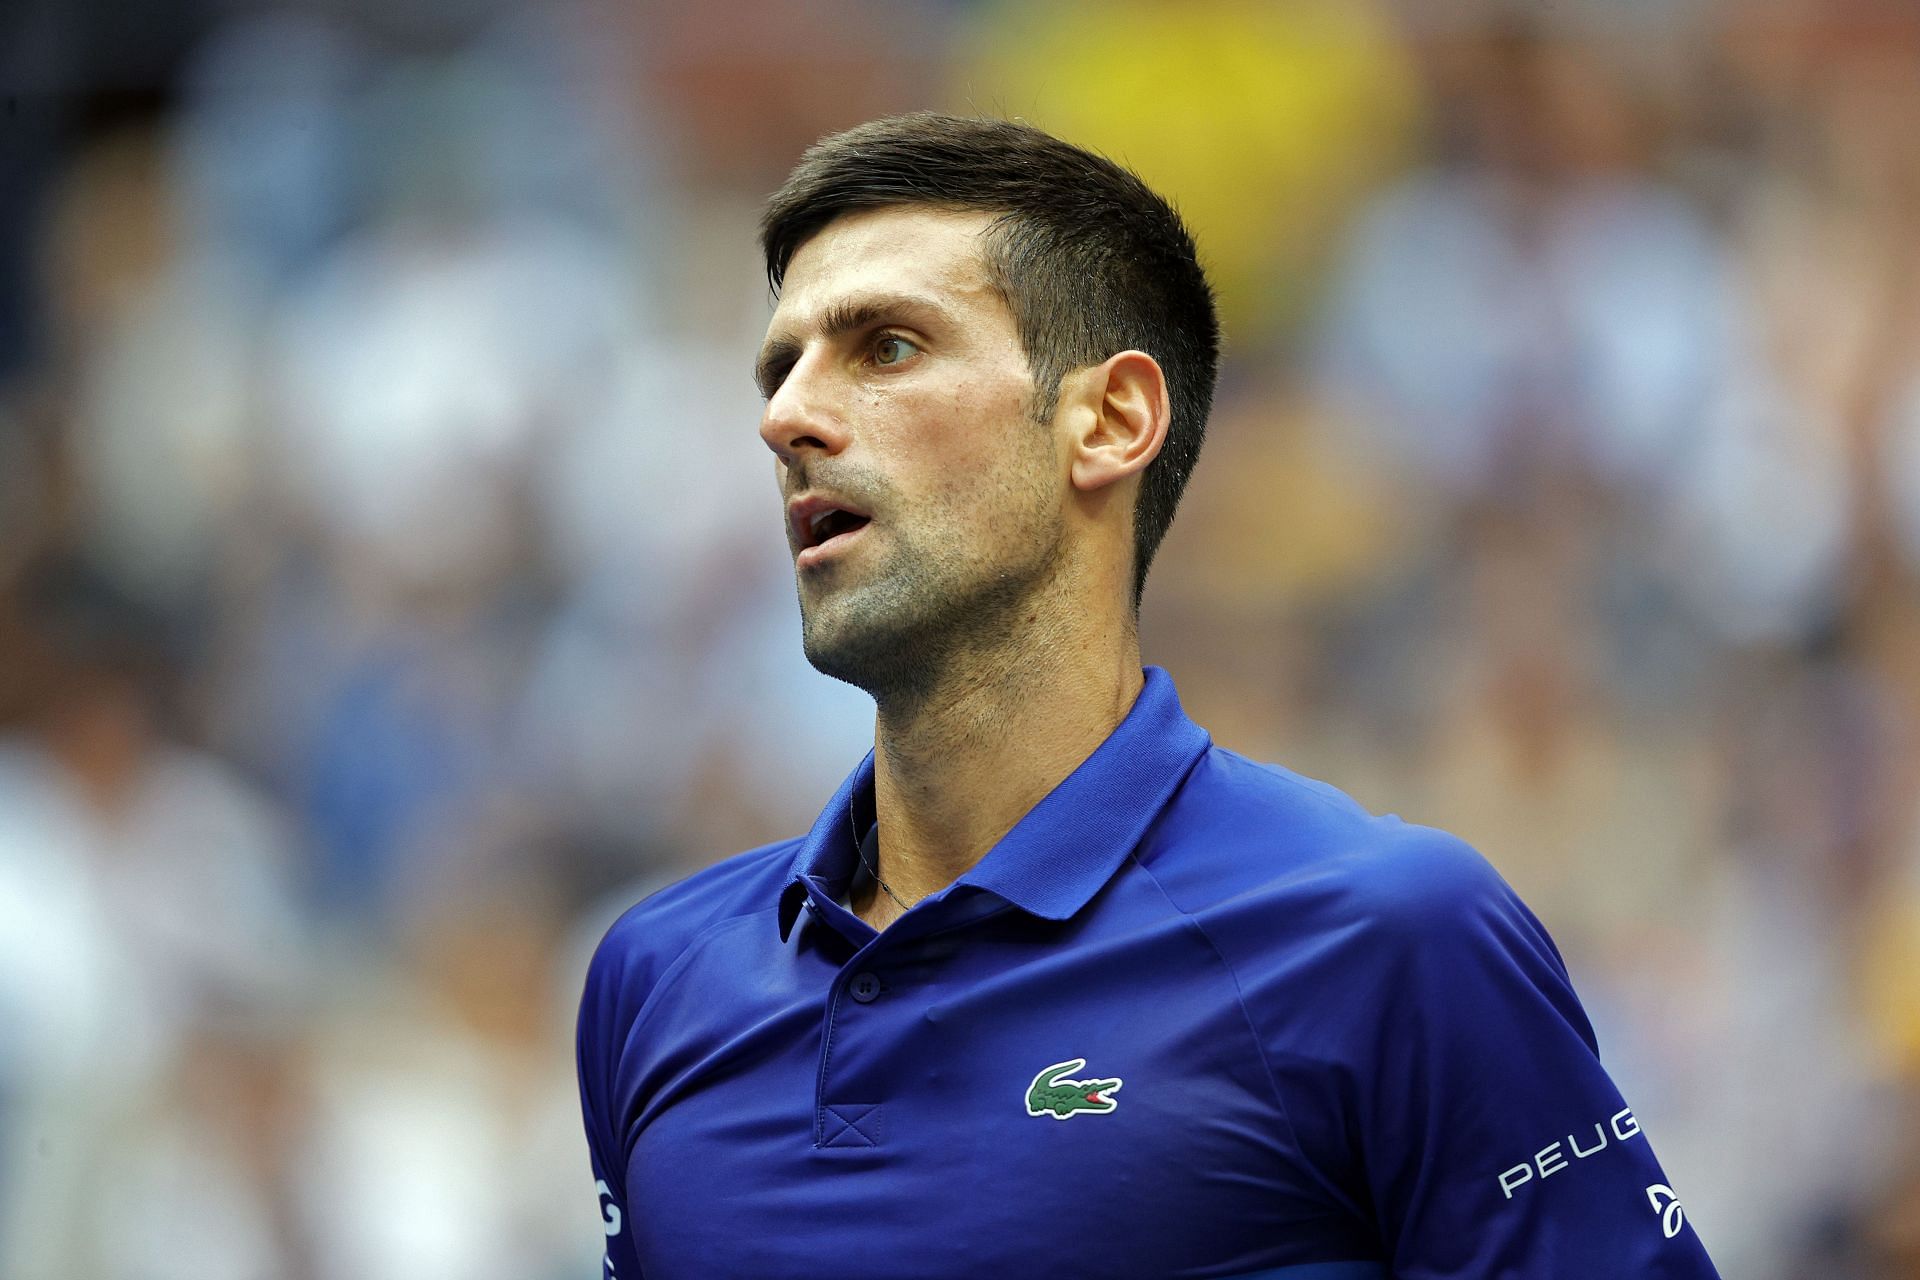 Novak Djokovic lost to Daniil Medvedev in the final last year.